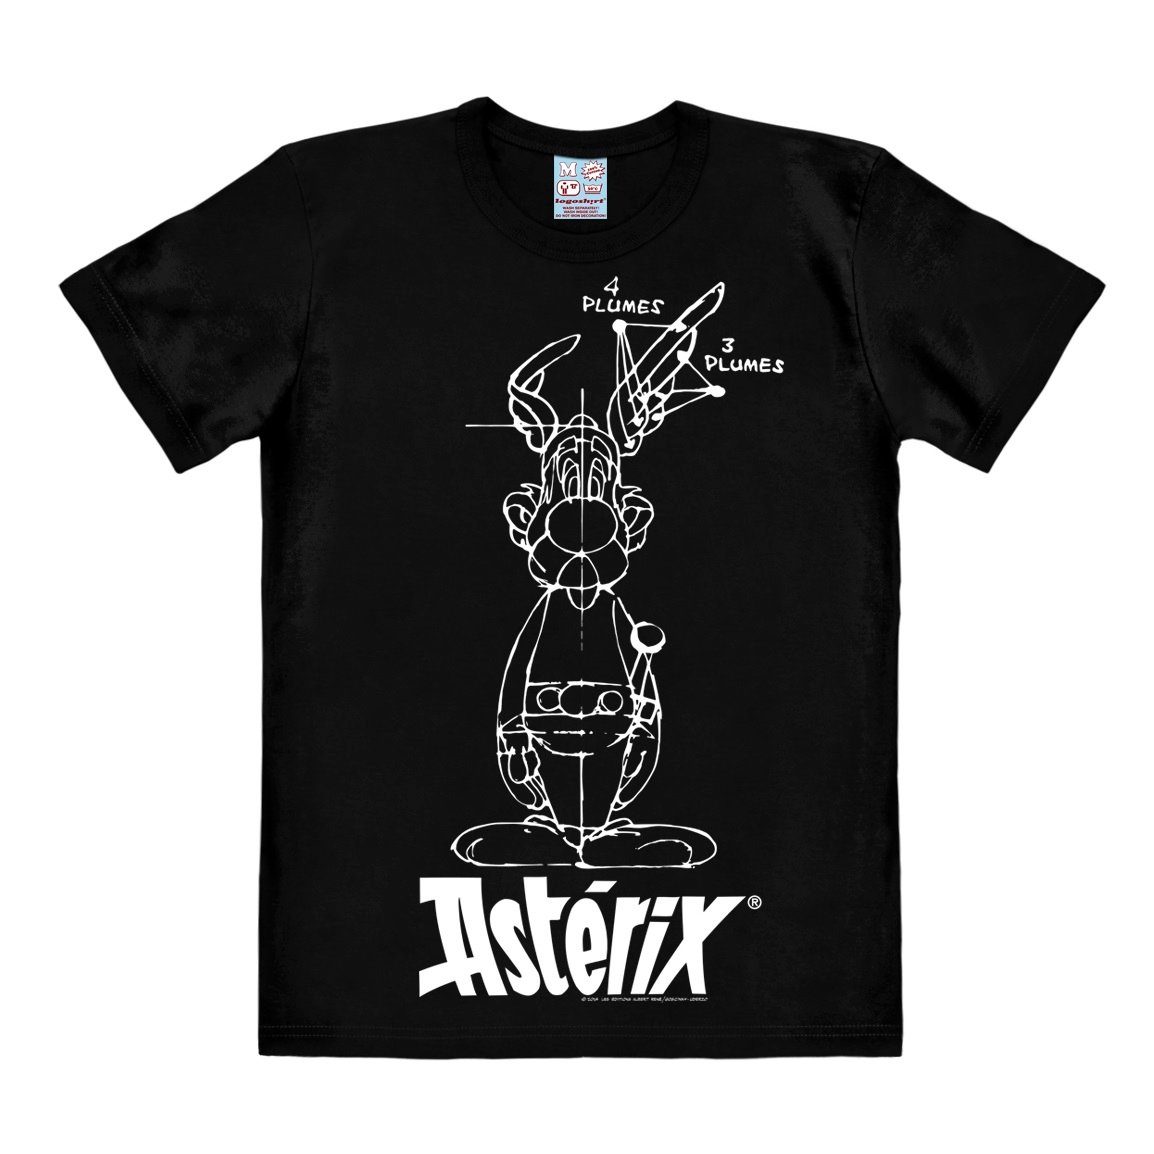 Gallier lizenzierten Originaldesign Asterix der T-Shirt LOGOSHIRT mit